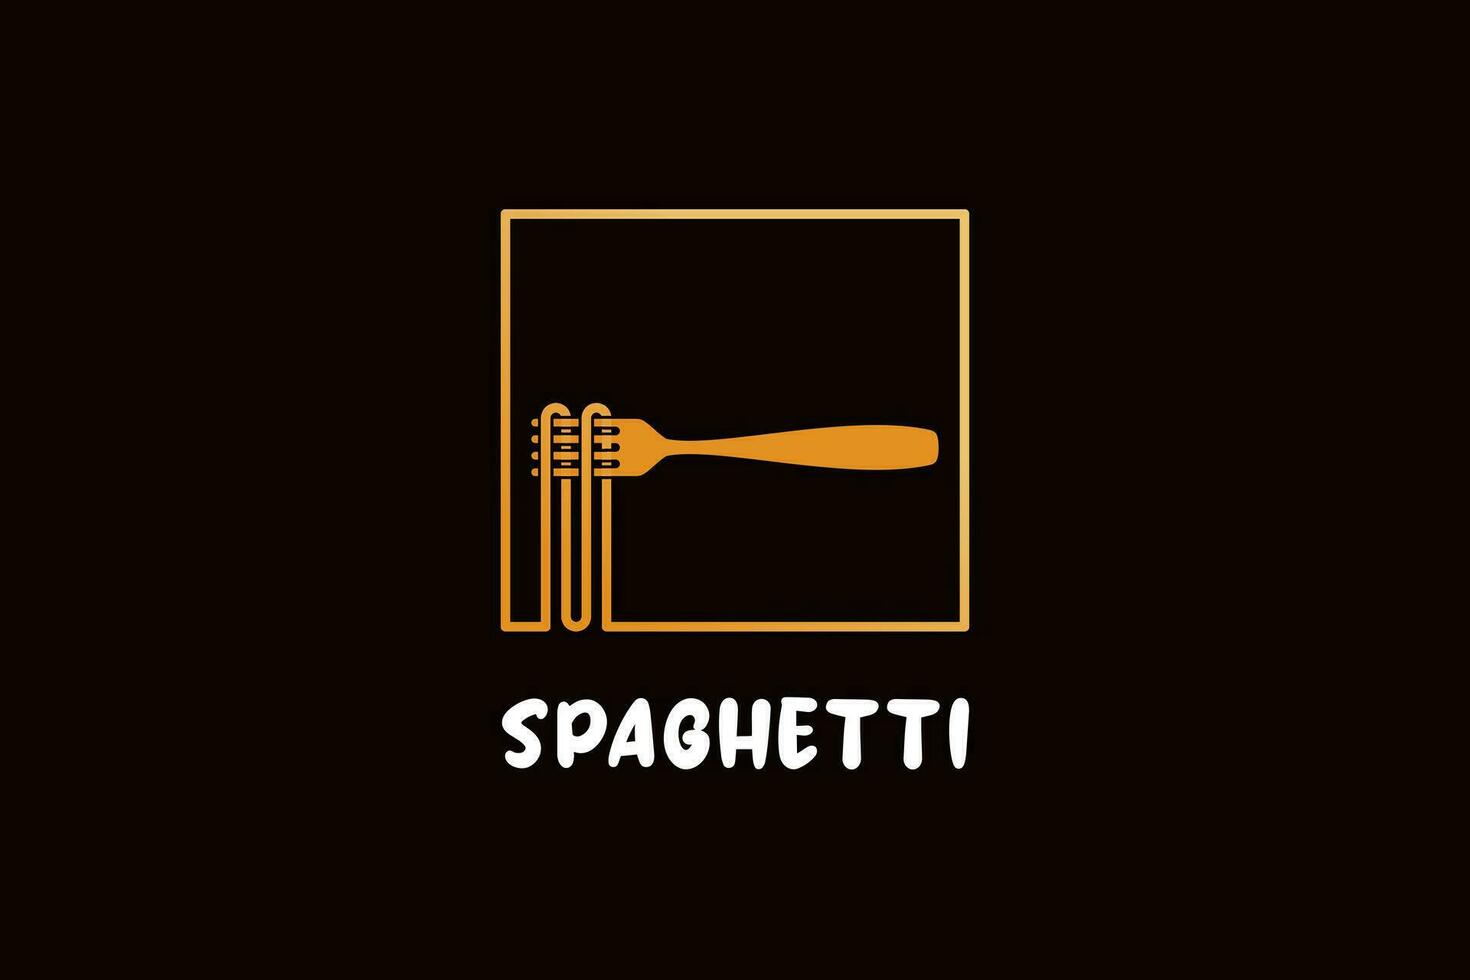 Spaghetti Vektor Illustration Logo Design mit modern Box Linie Konzept